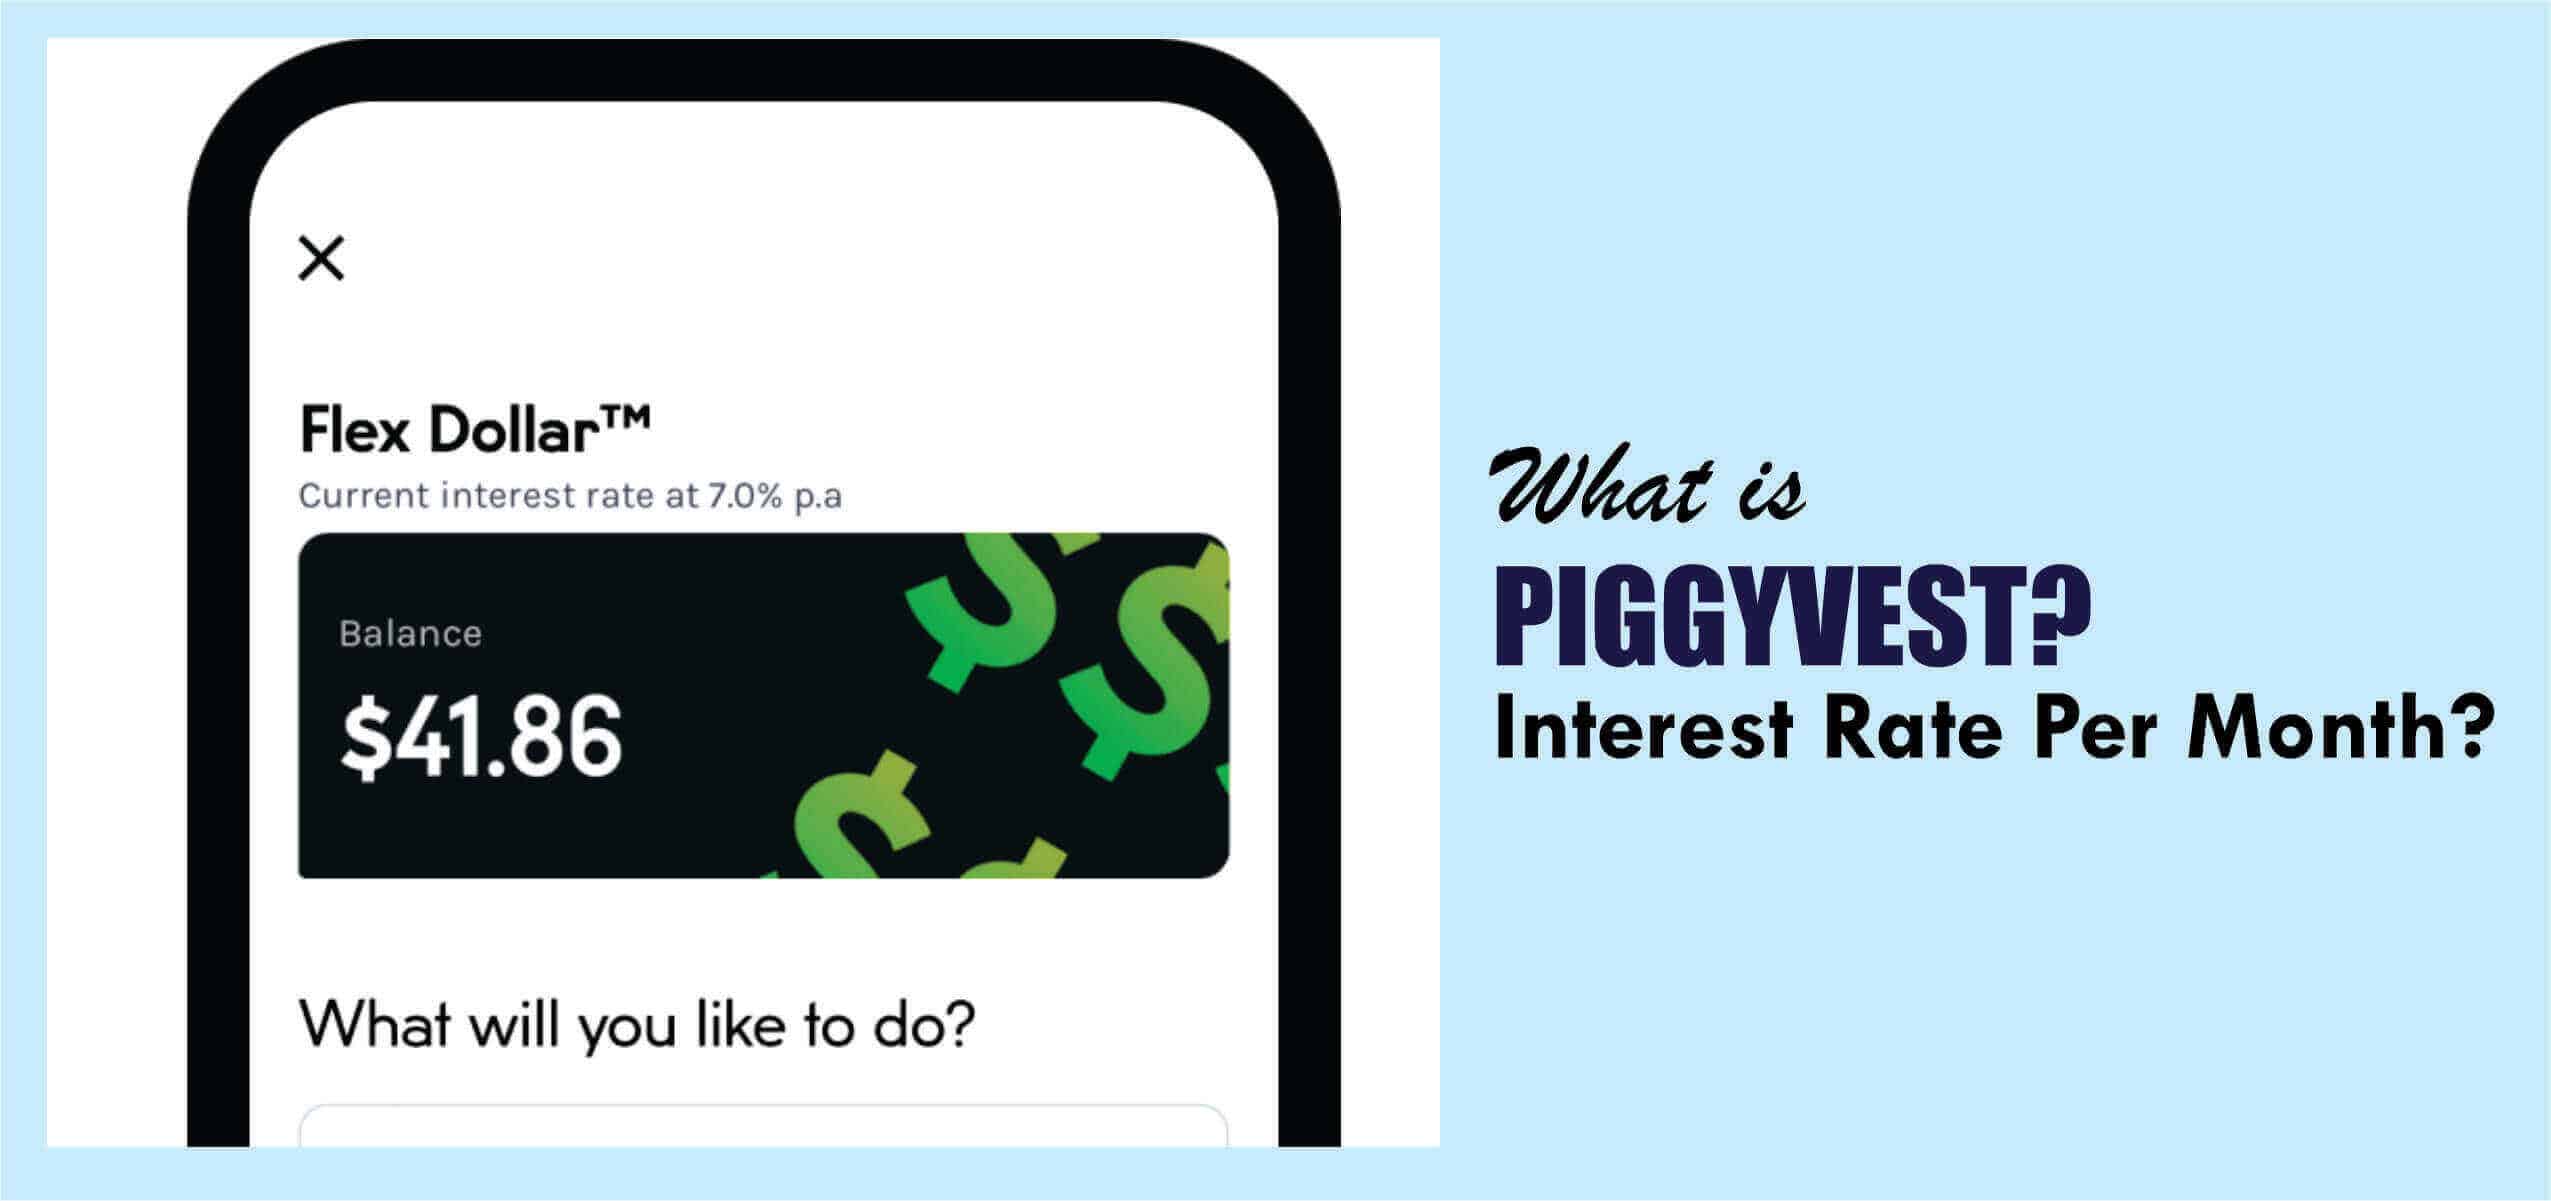 Piggyvest interest rate